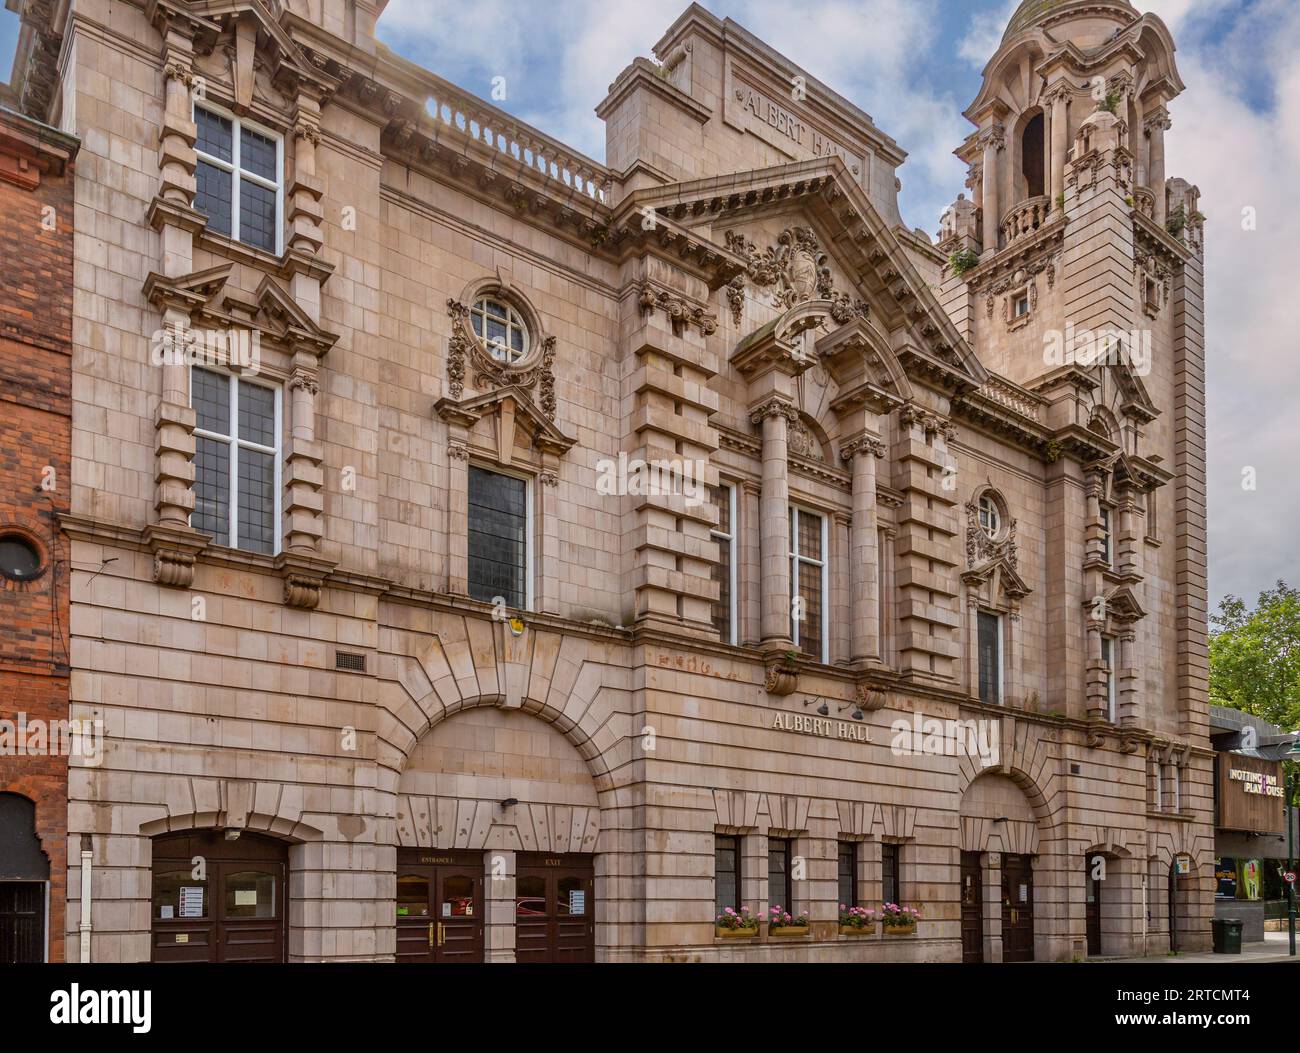 Albert Hall, Nottingham, Großbritannien. Stockfoto